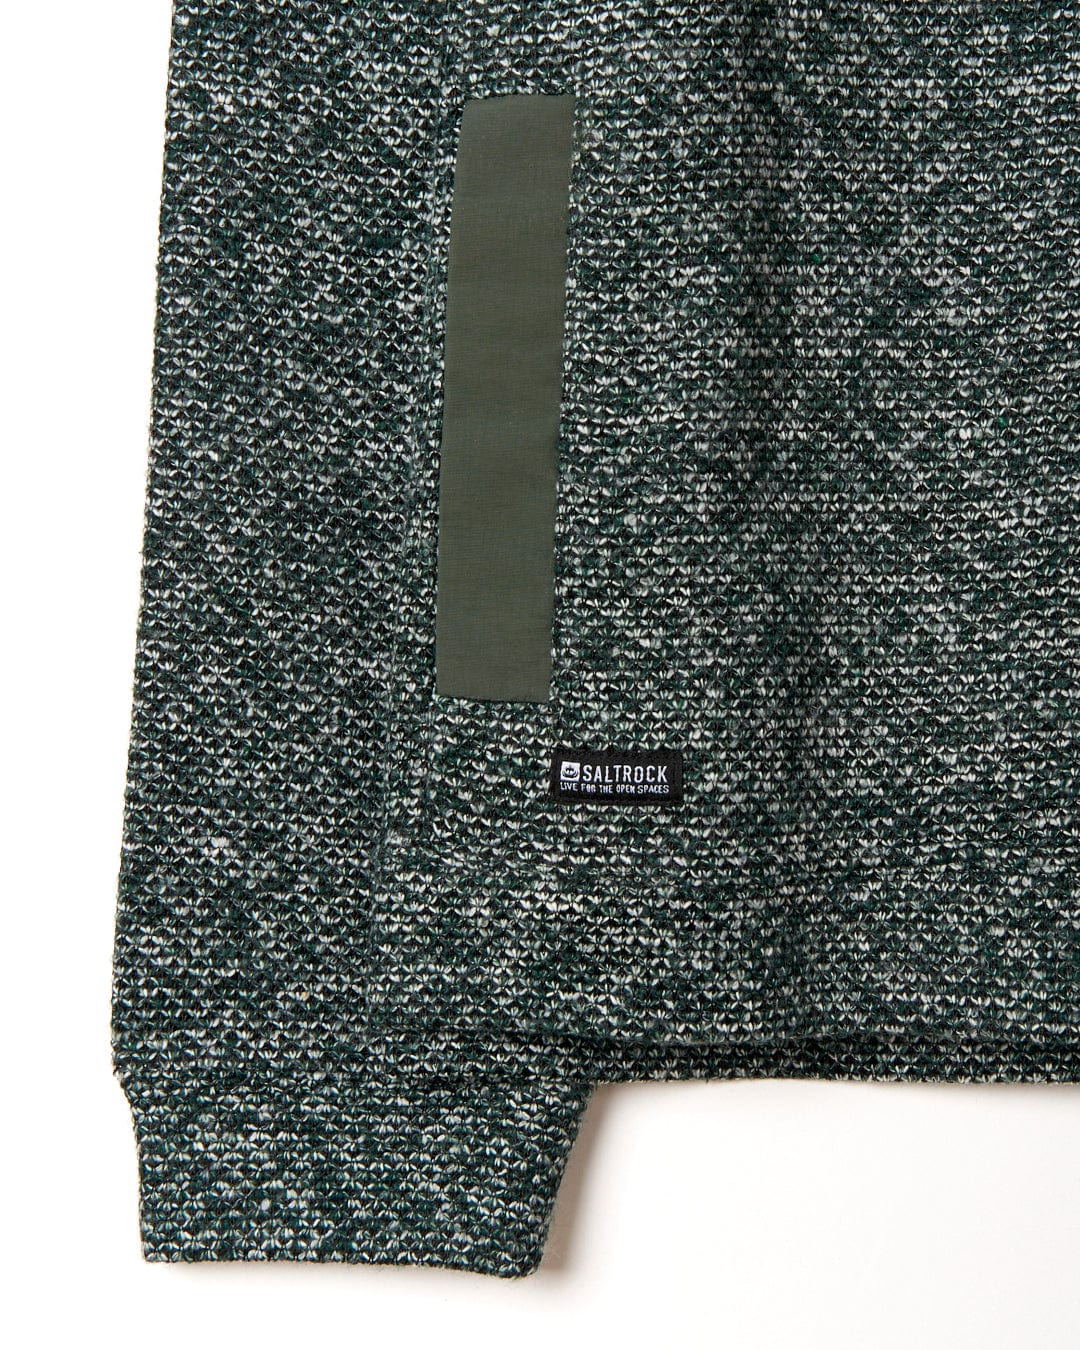 A lightweight knit green sweater with embroidered Meddow - 1/4 Neck Sweatshirt - Dark Green branding.